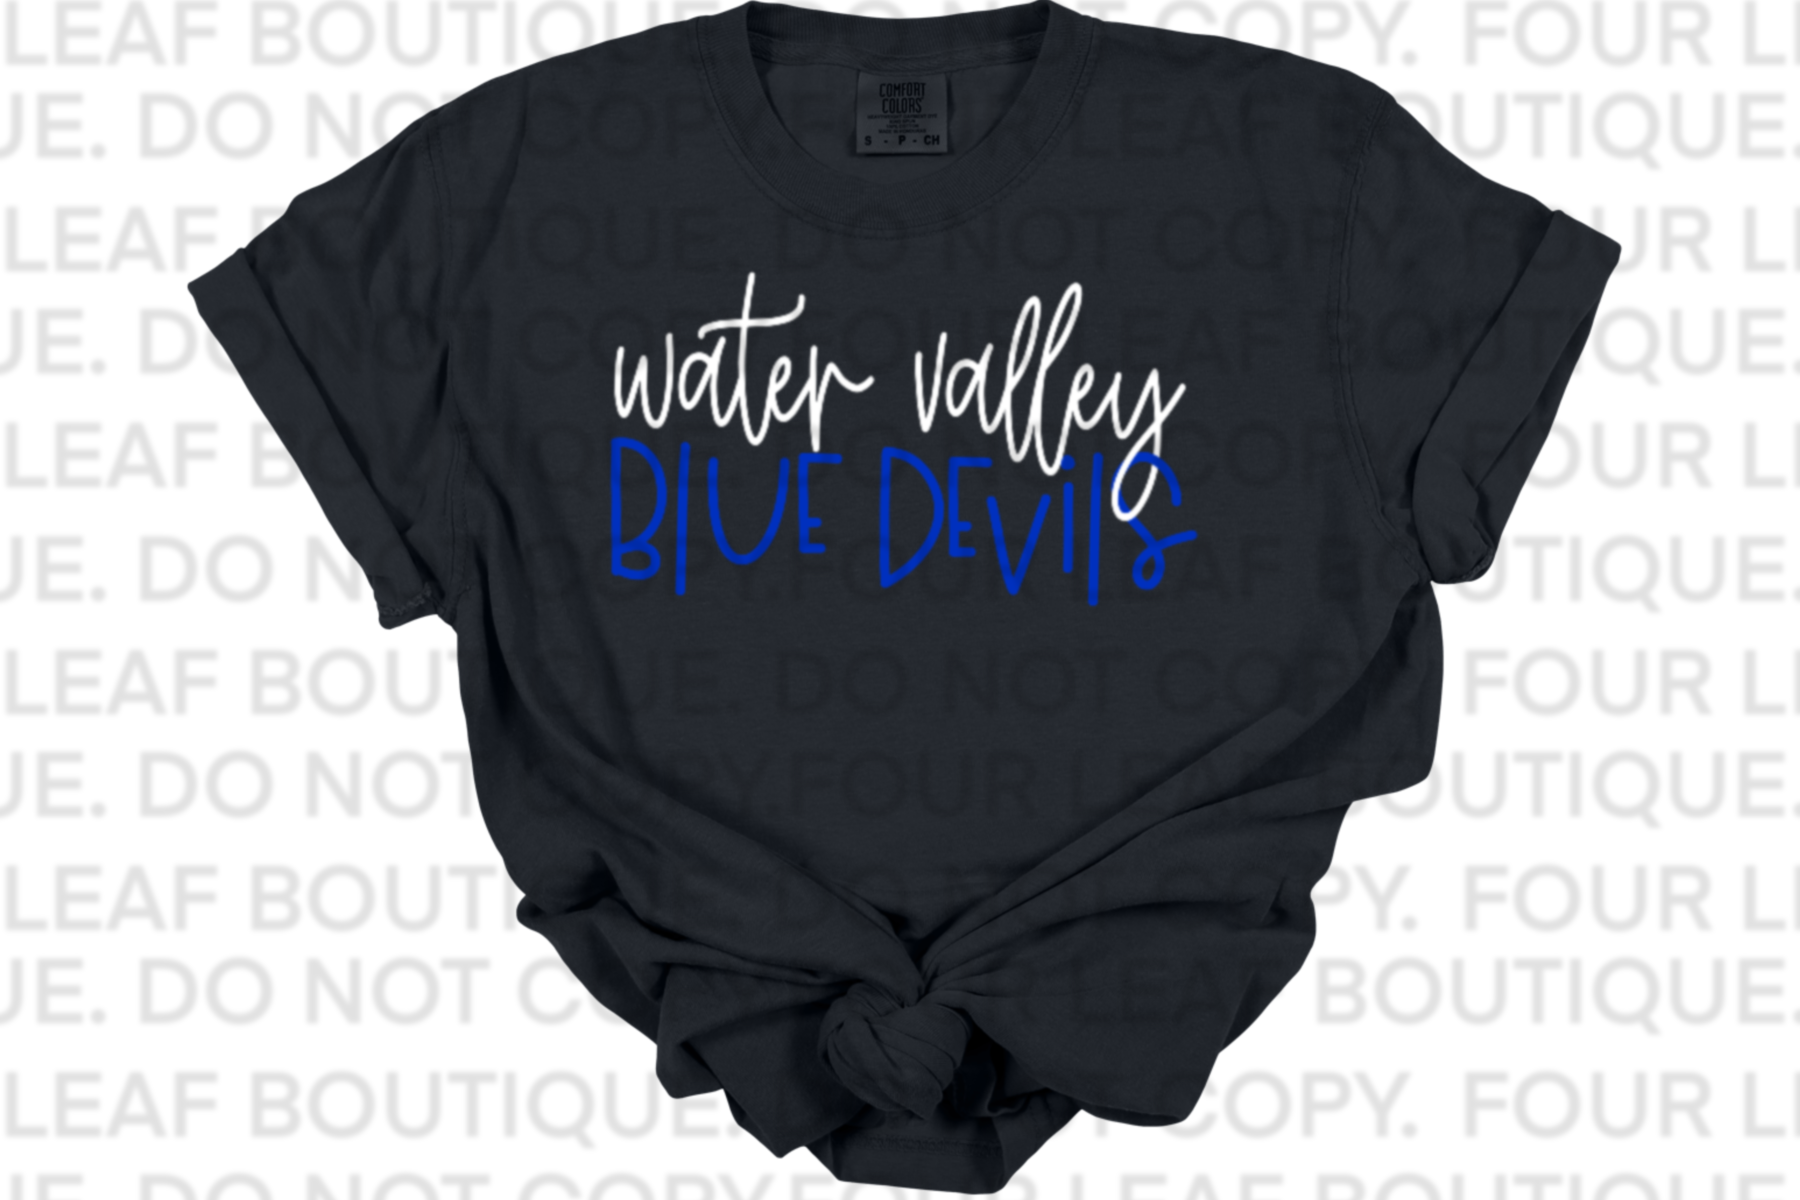 Water Valley Blue Devils